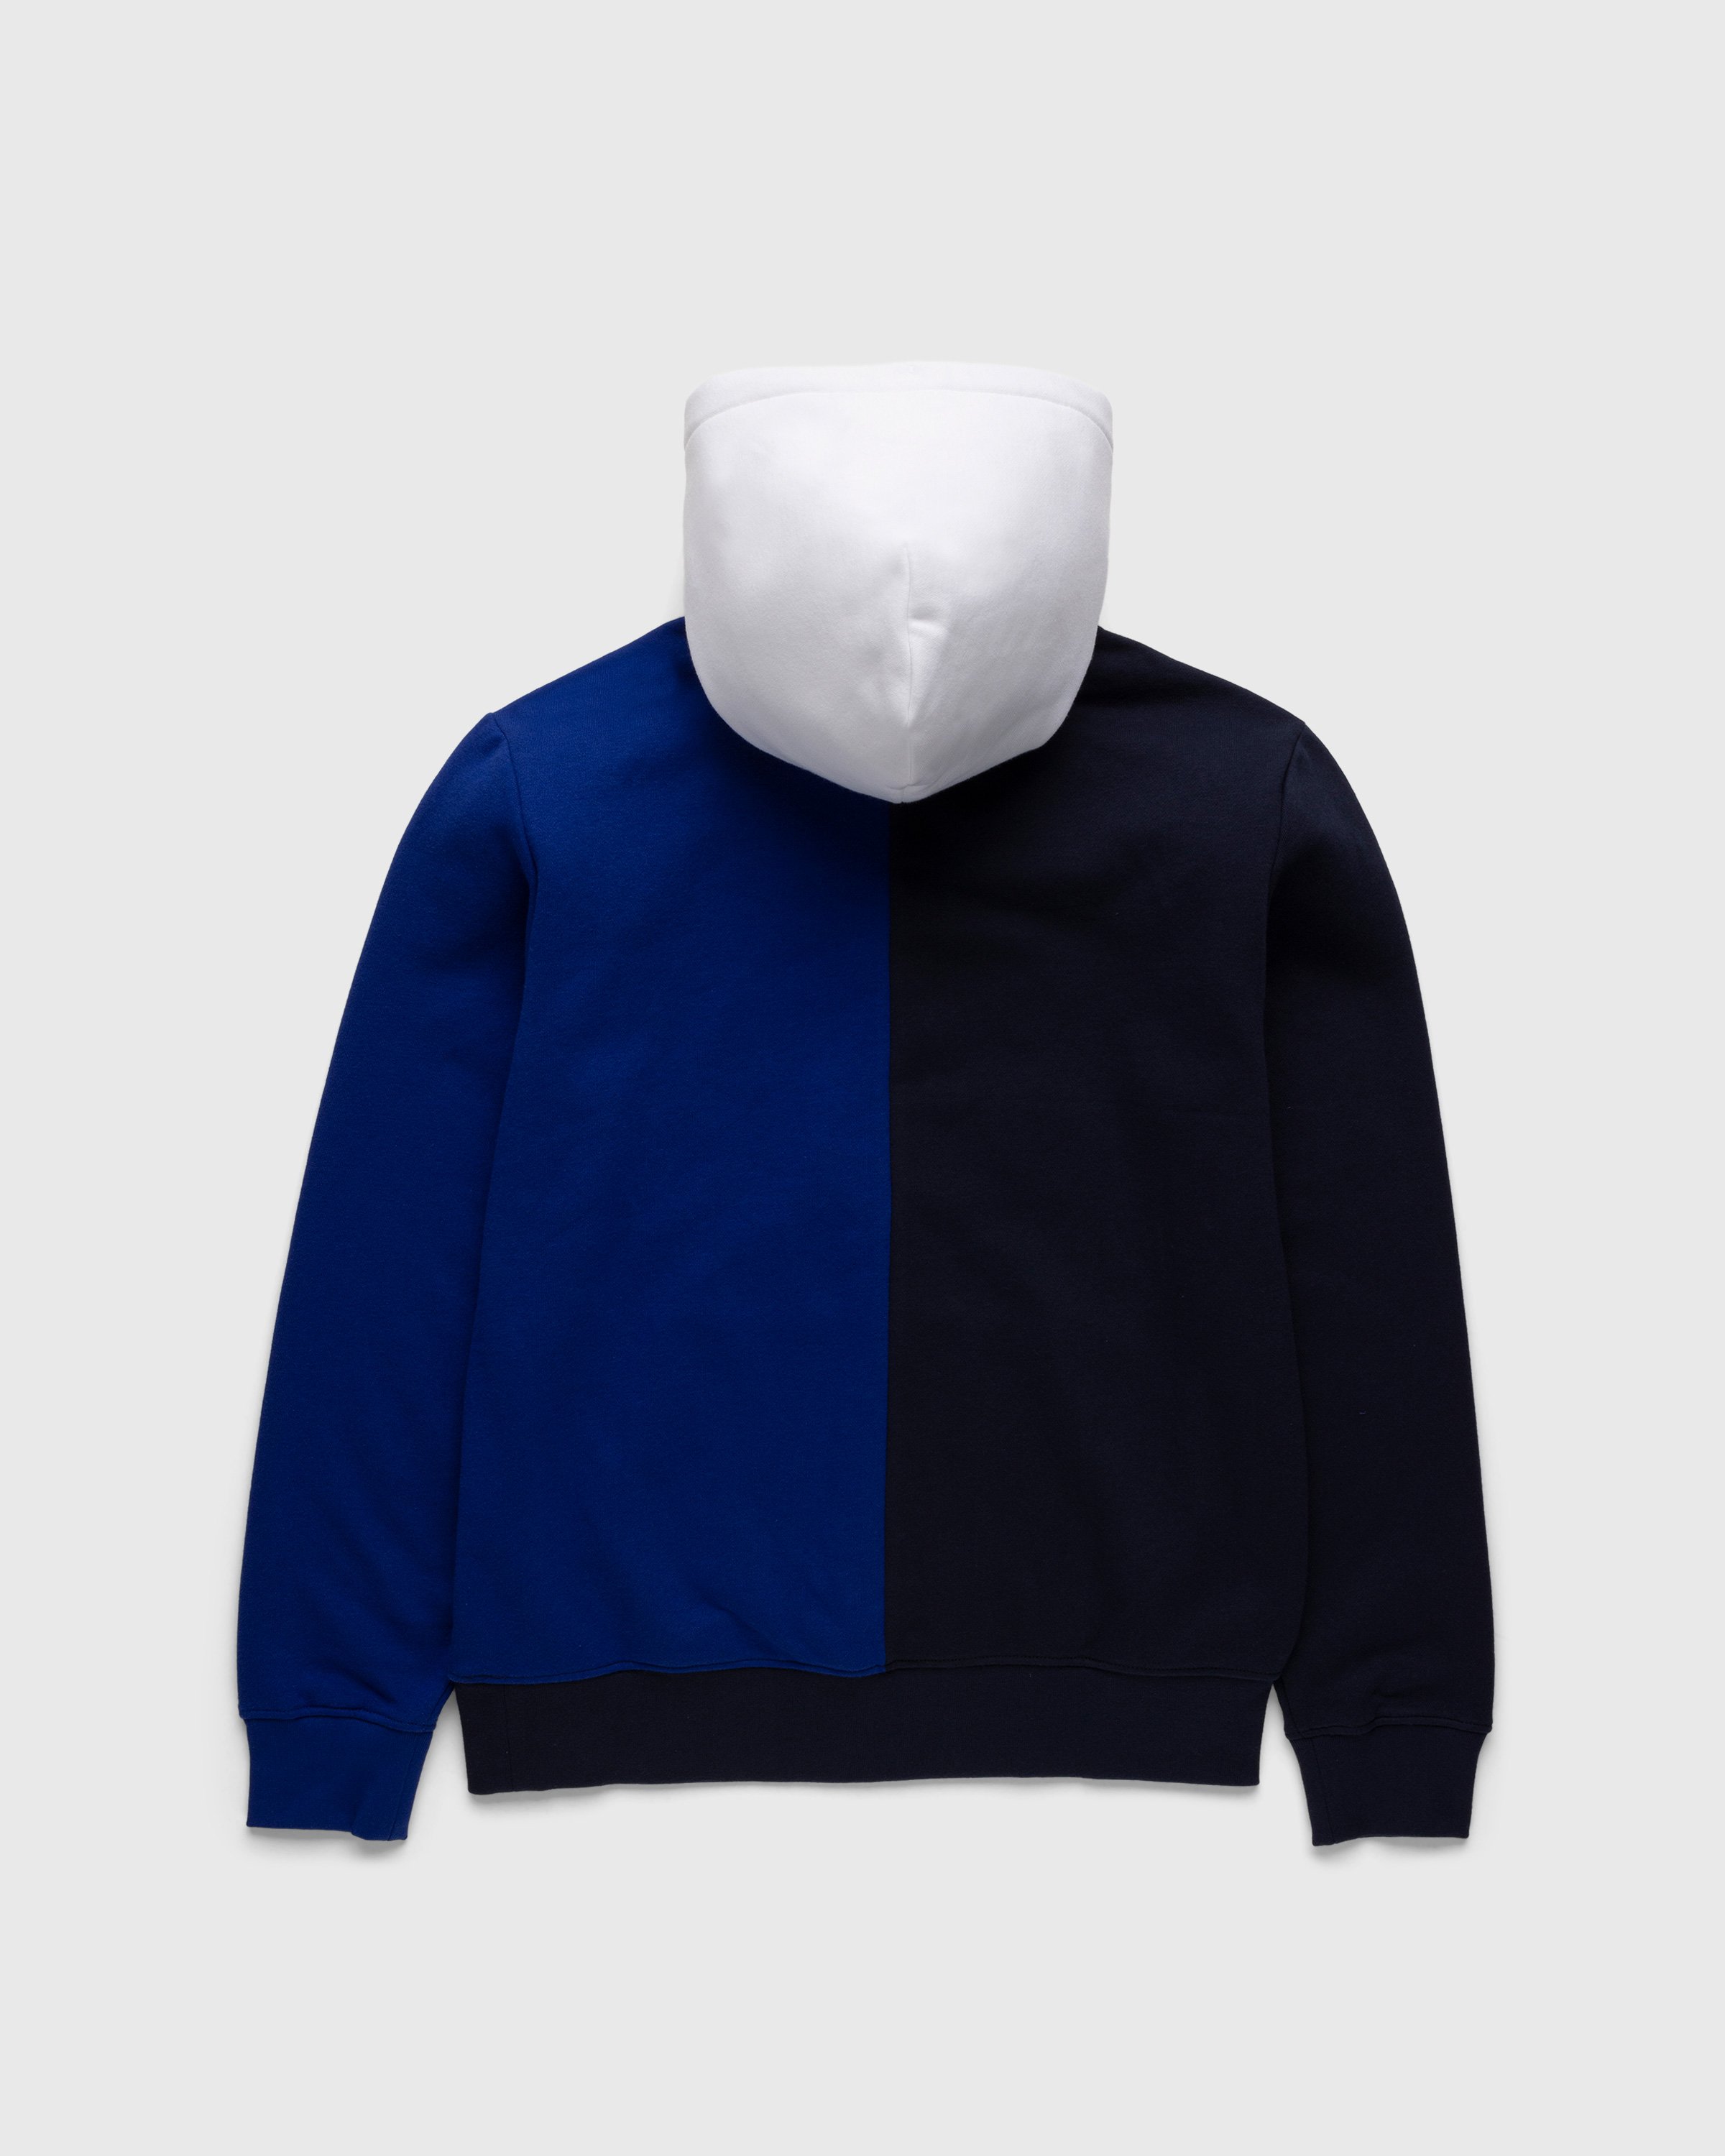 Ralph Lauren x Fortnite - Long Sleeve Sweatshirt Blue - Clothing - Blue - Image 2